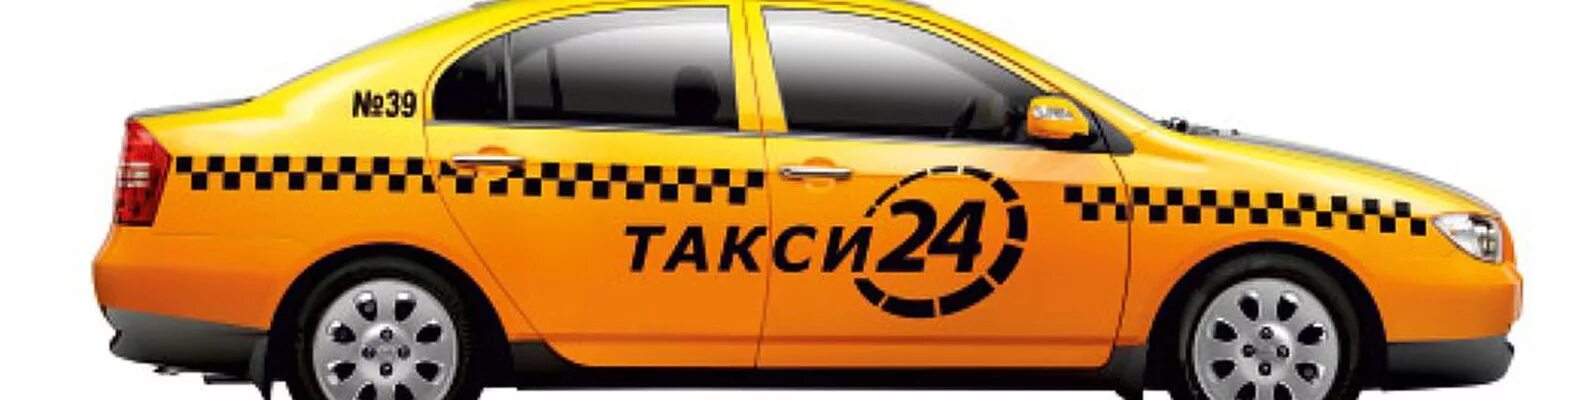 Такси буда кошелева. Машина "такси". Такси картинки. Такси 24 24 24. Такси в городе.